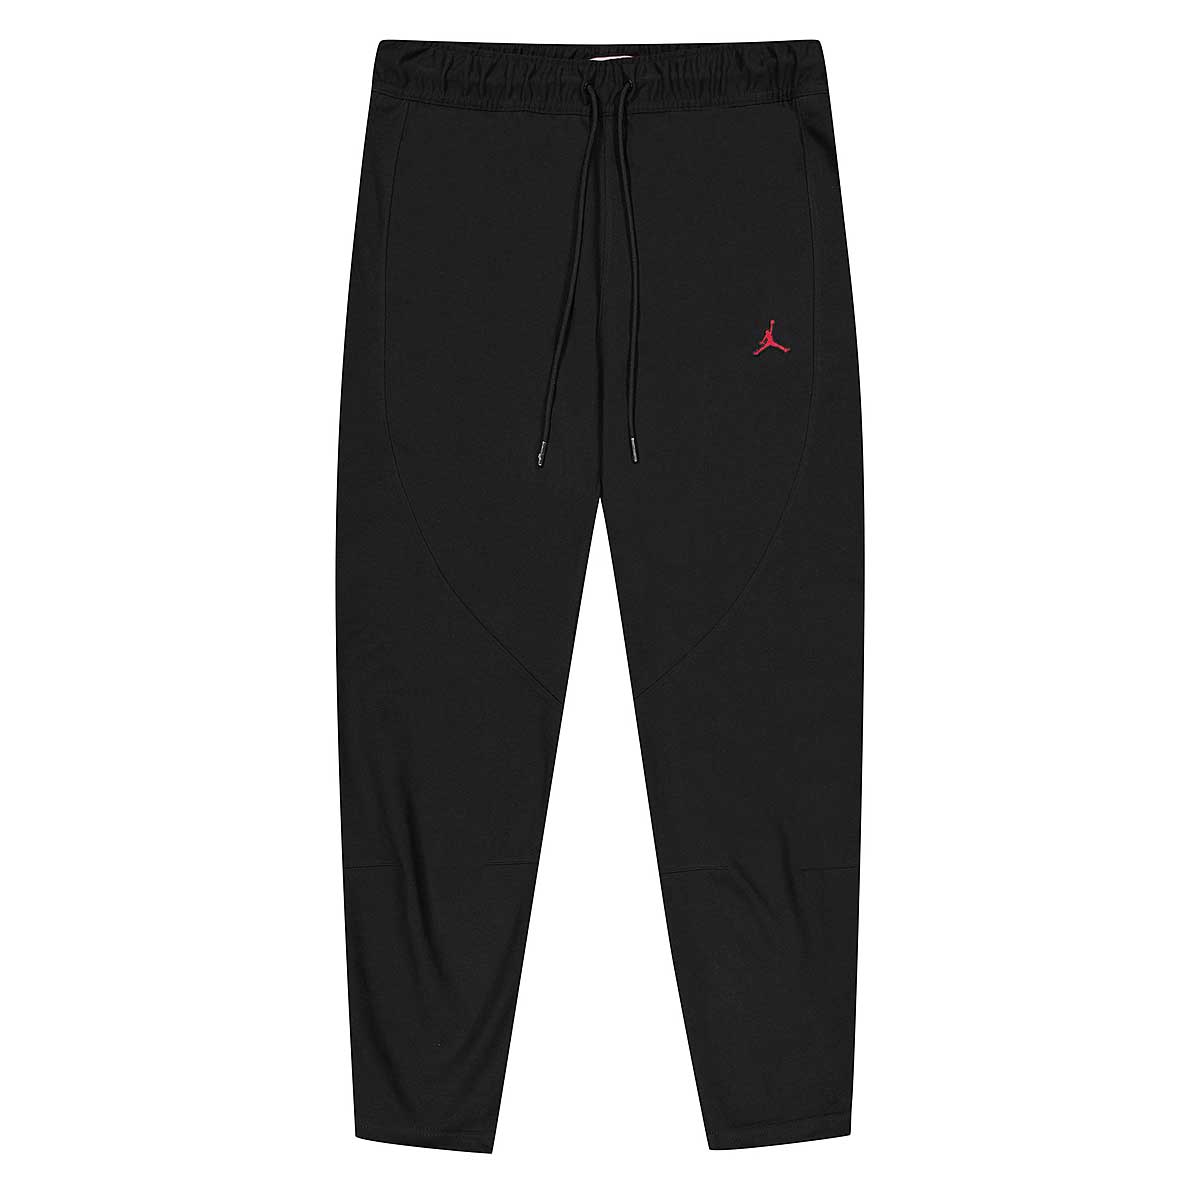 Jordan Essential Warmup Pant, Black/Gym Red